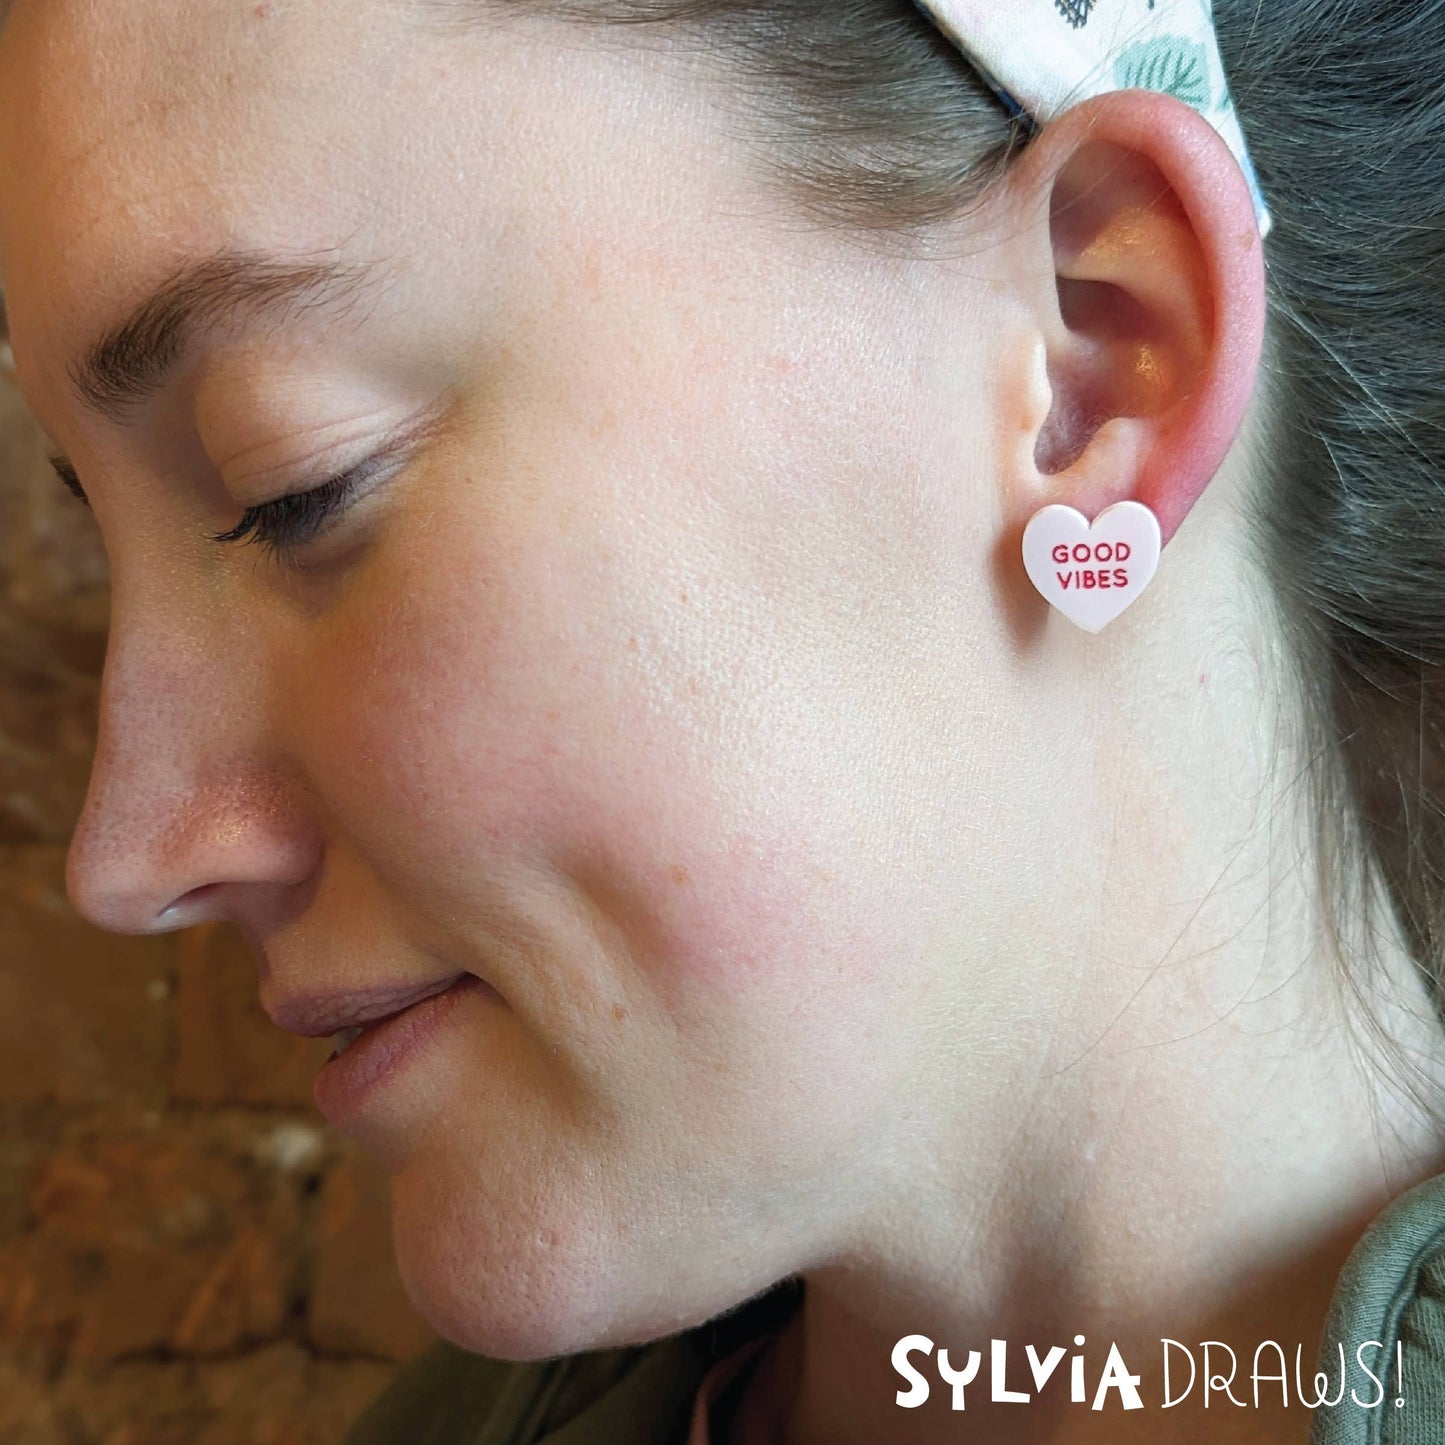 Sylvia Draws - Sweet Talk Candy Heart Stud Earrings: Positivity Pals